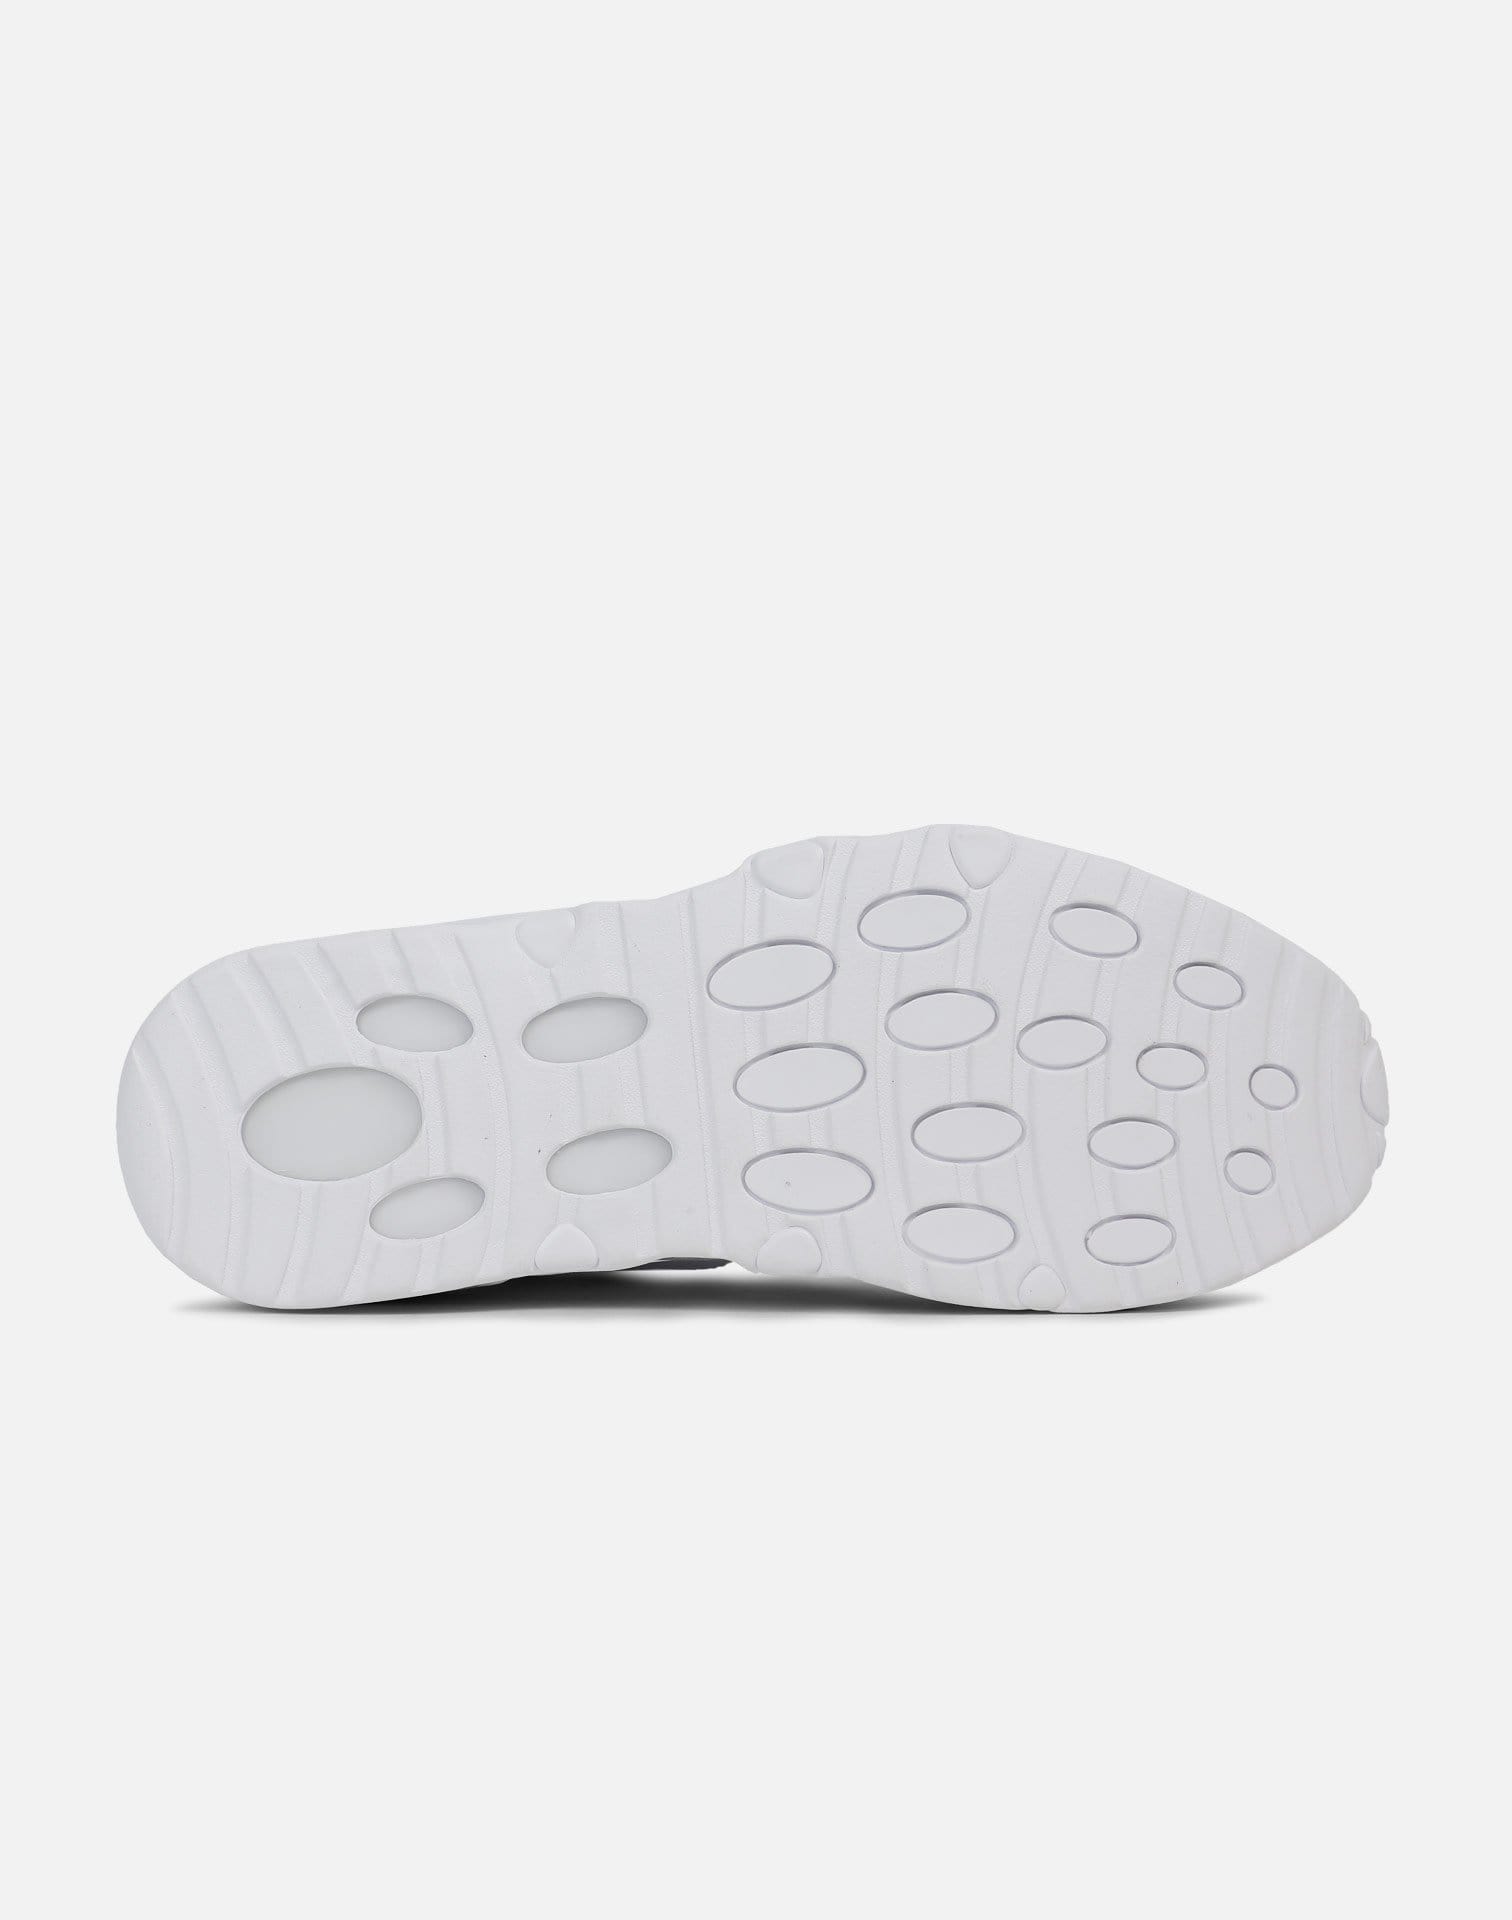 Nike Air Max Uptempo 95 (White/White-White)